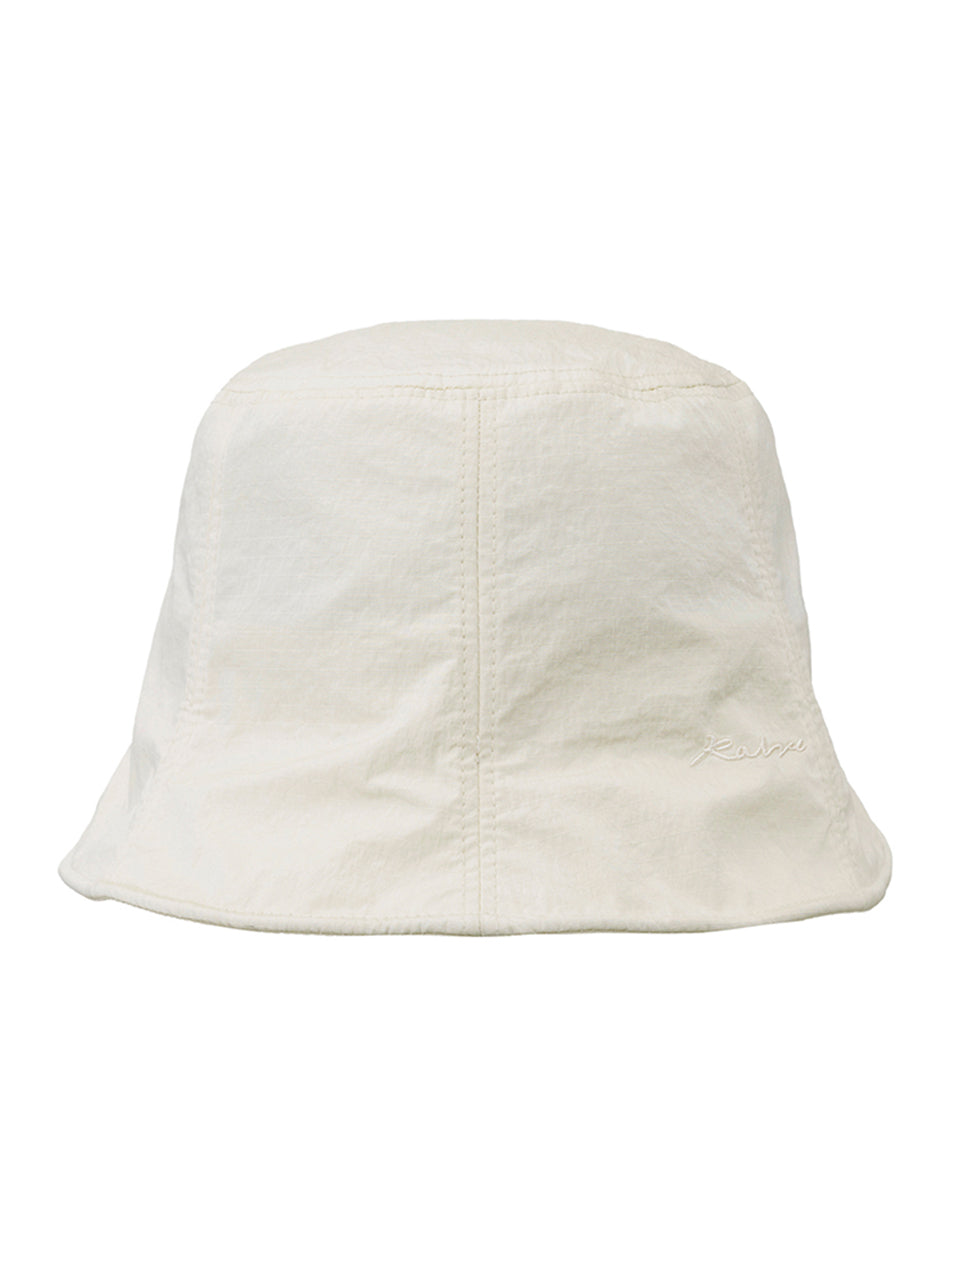 Ribbon Strap Bucket Hat in Ivory